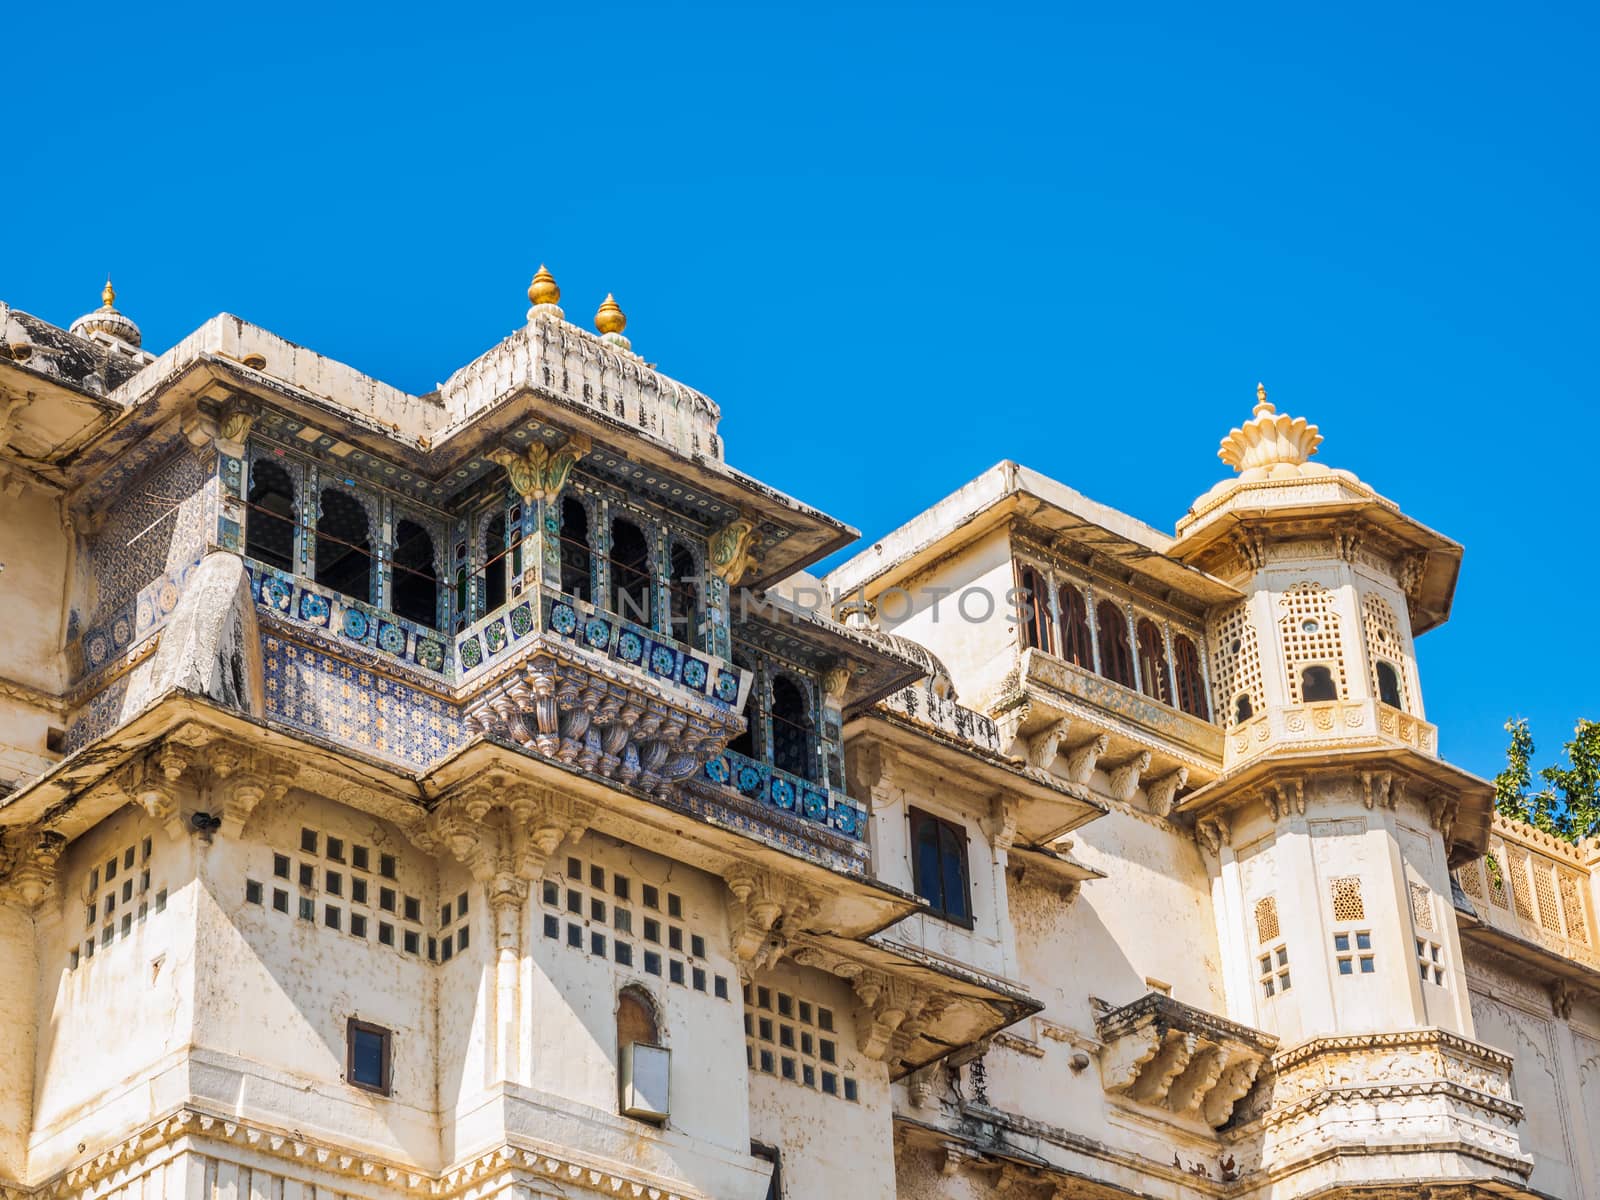 Balcony of Udaipur City Palace by takepicsforfun